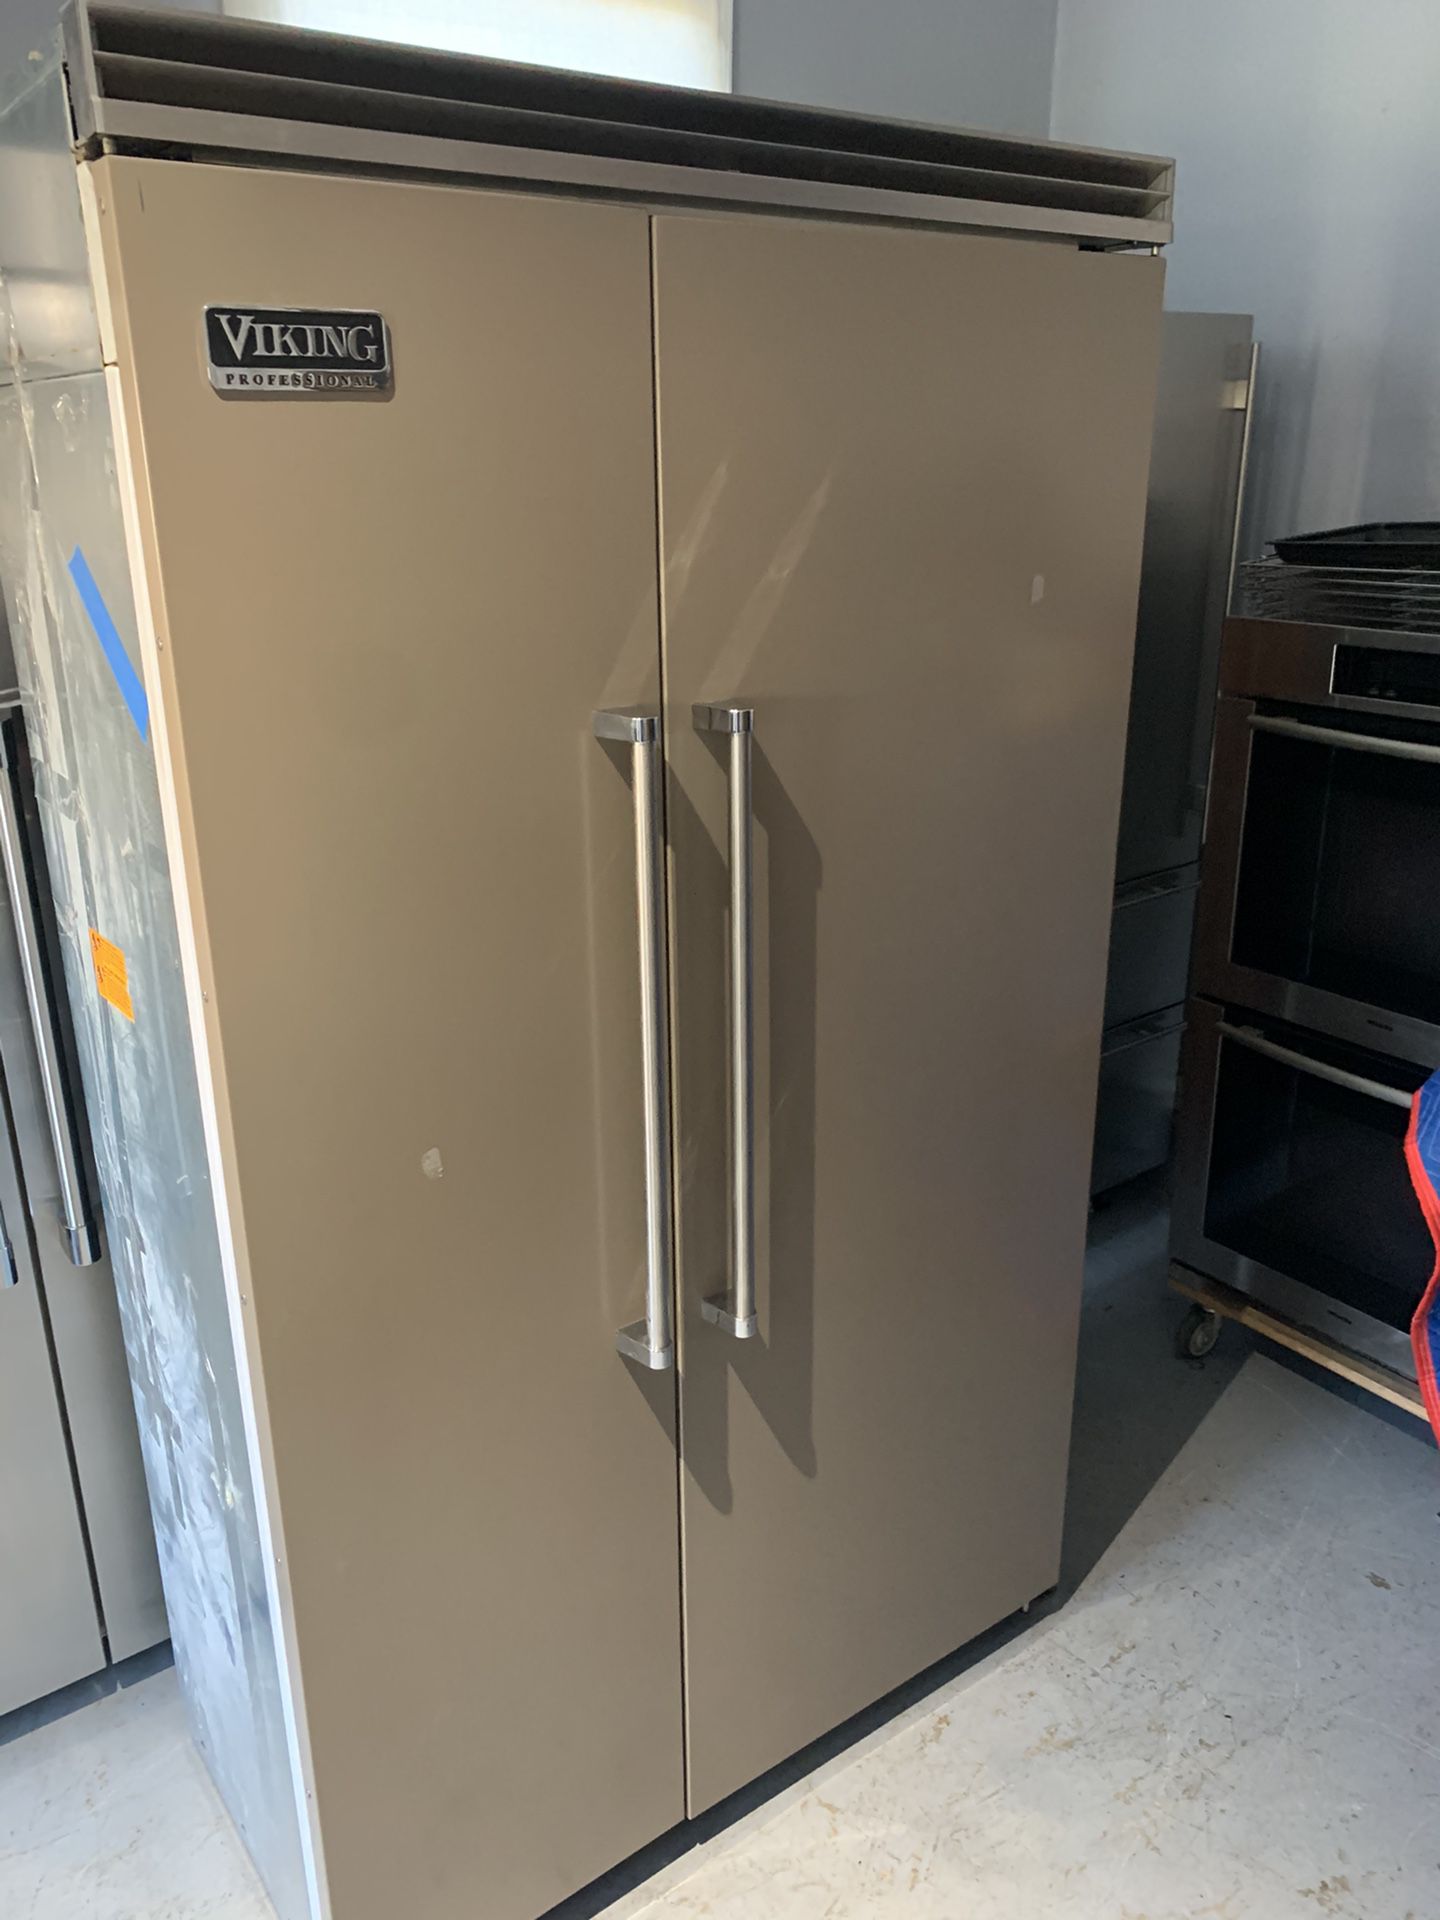 Beautiful viking refrigerator 48” wide